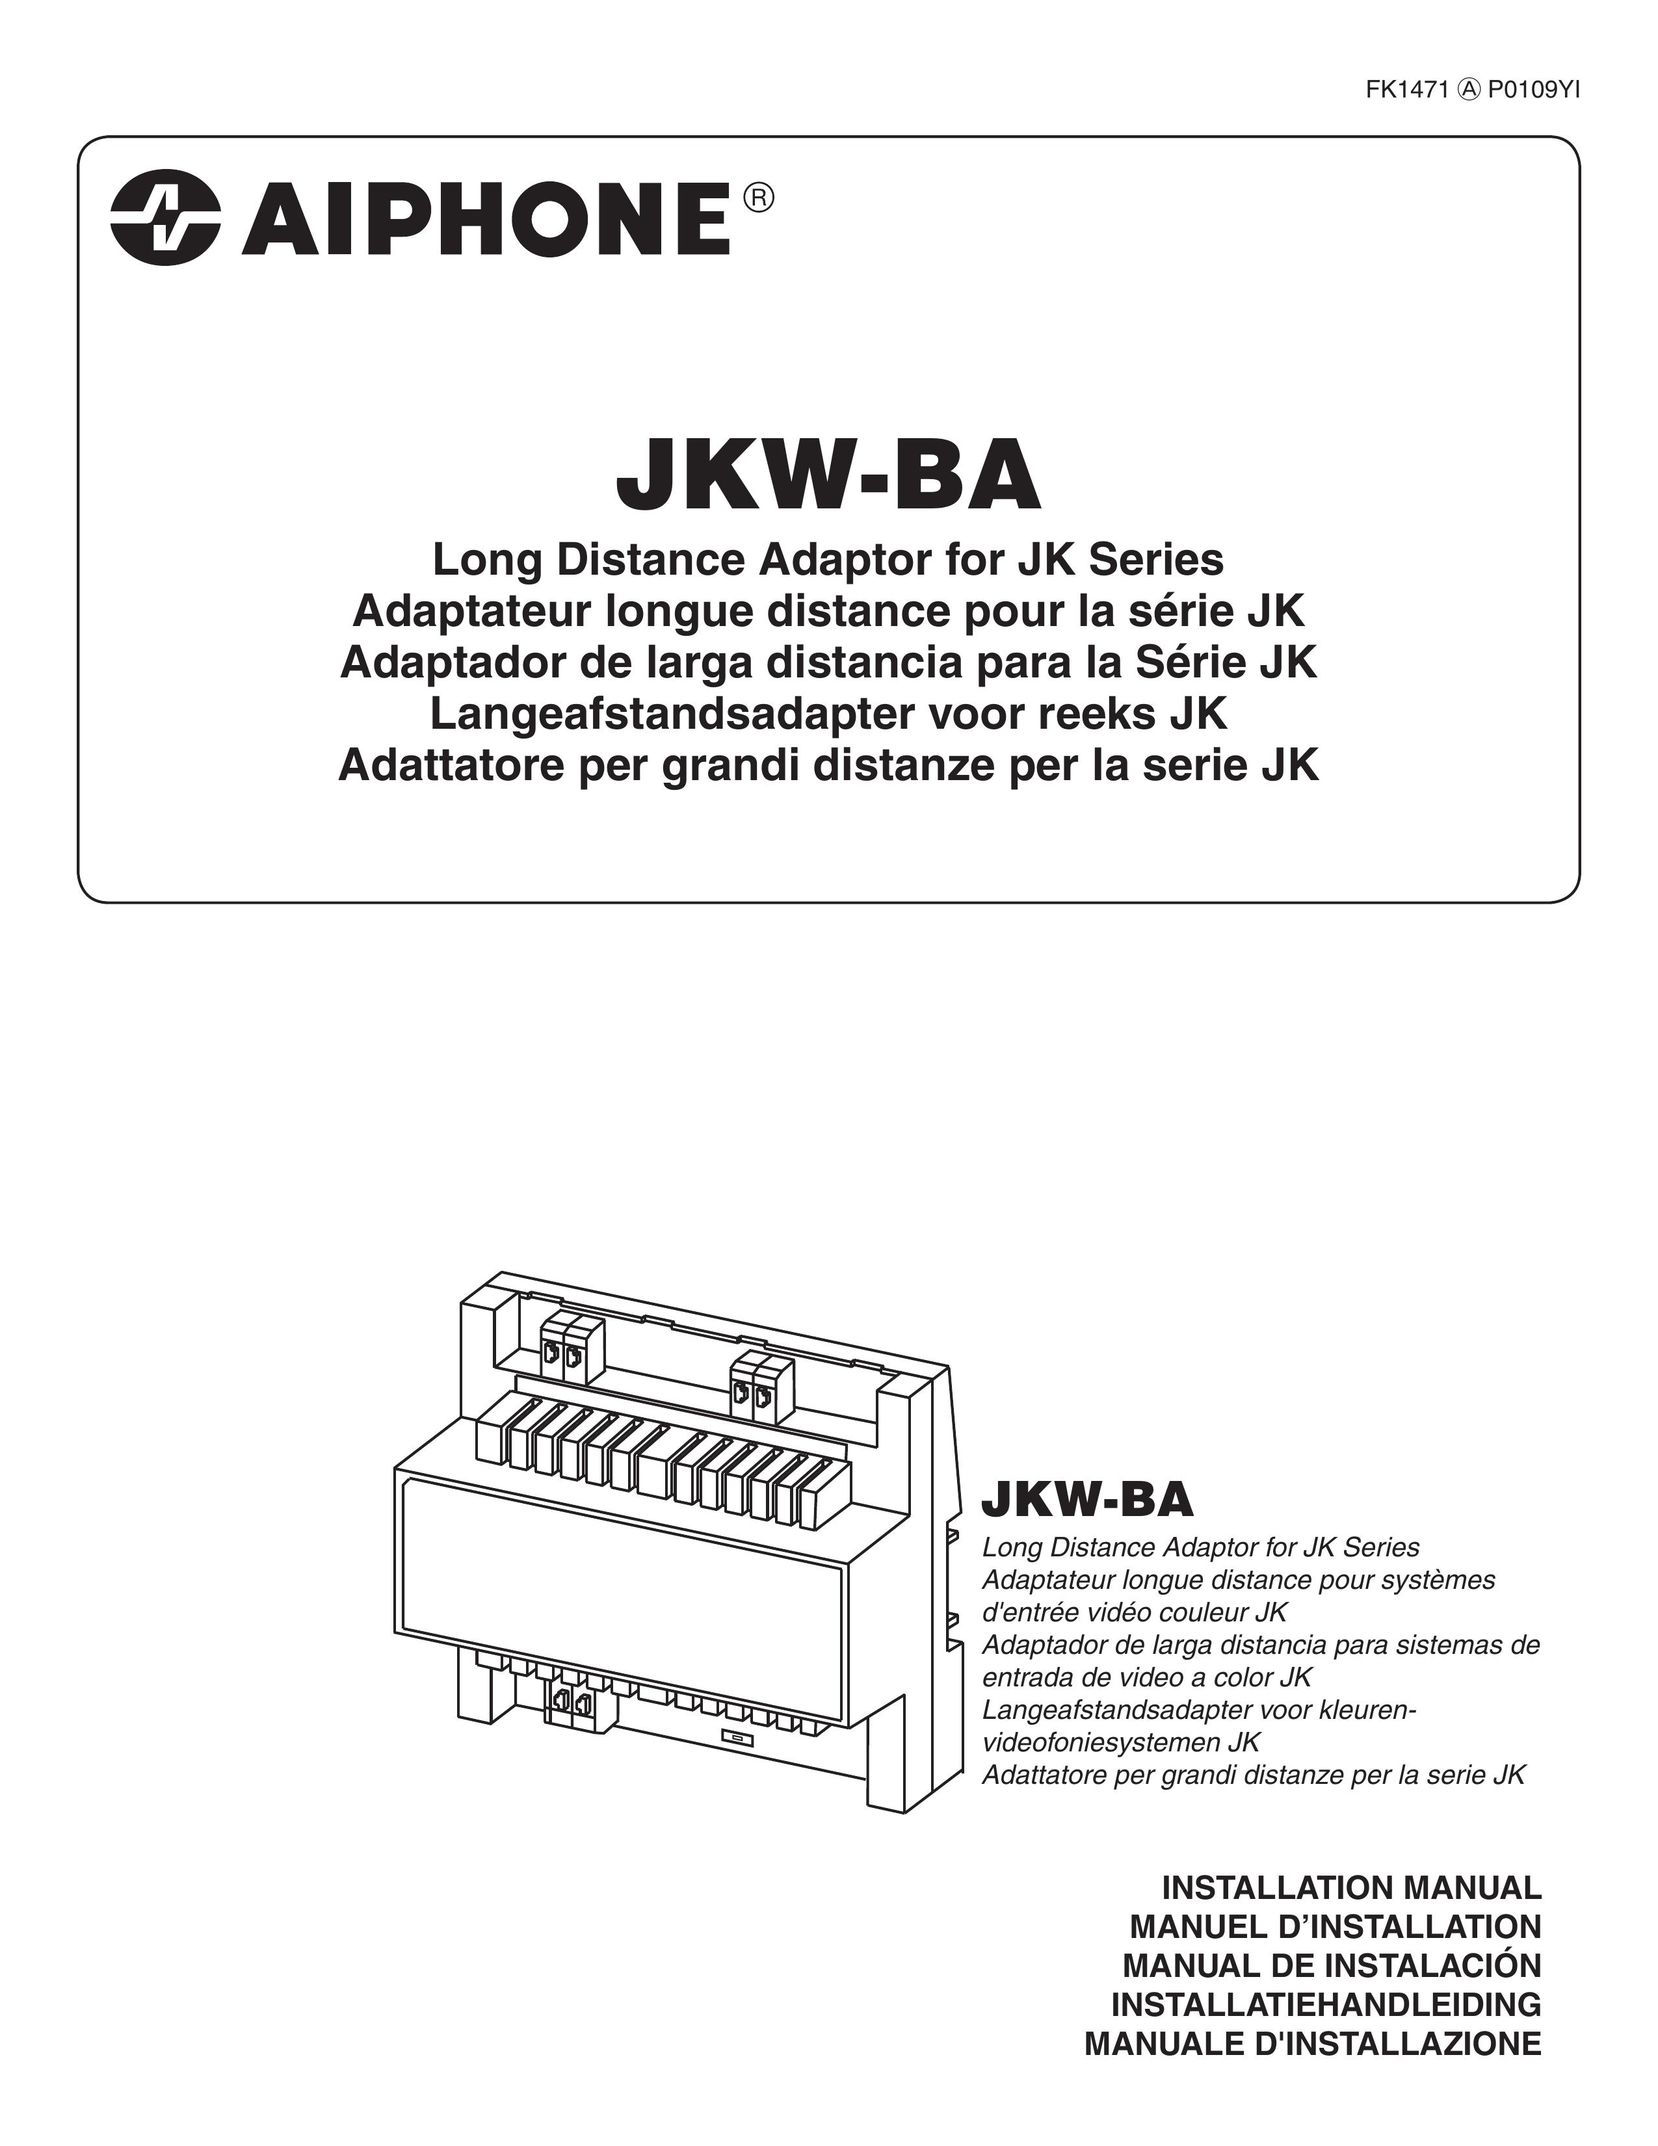 Aiphone JKW-BA Network Card User Manual